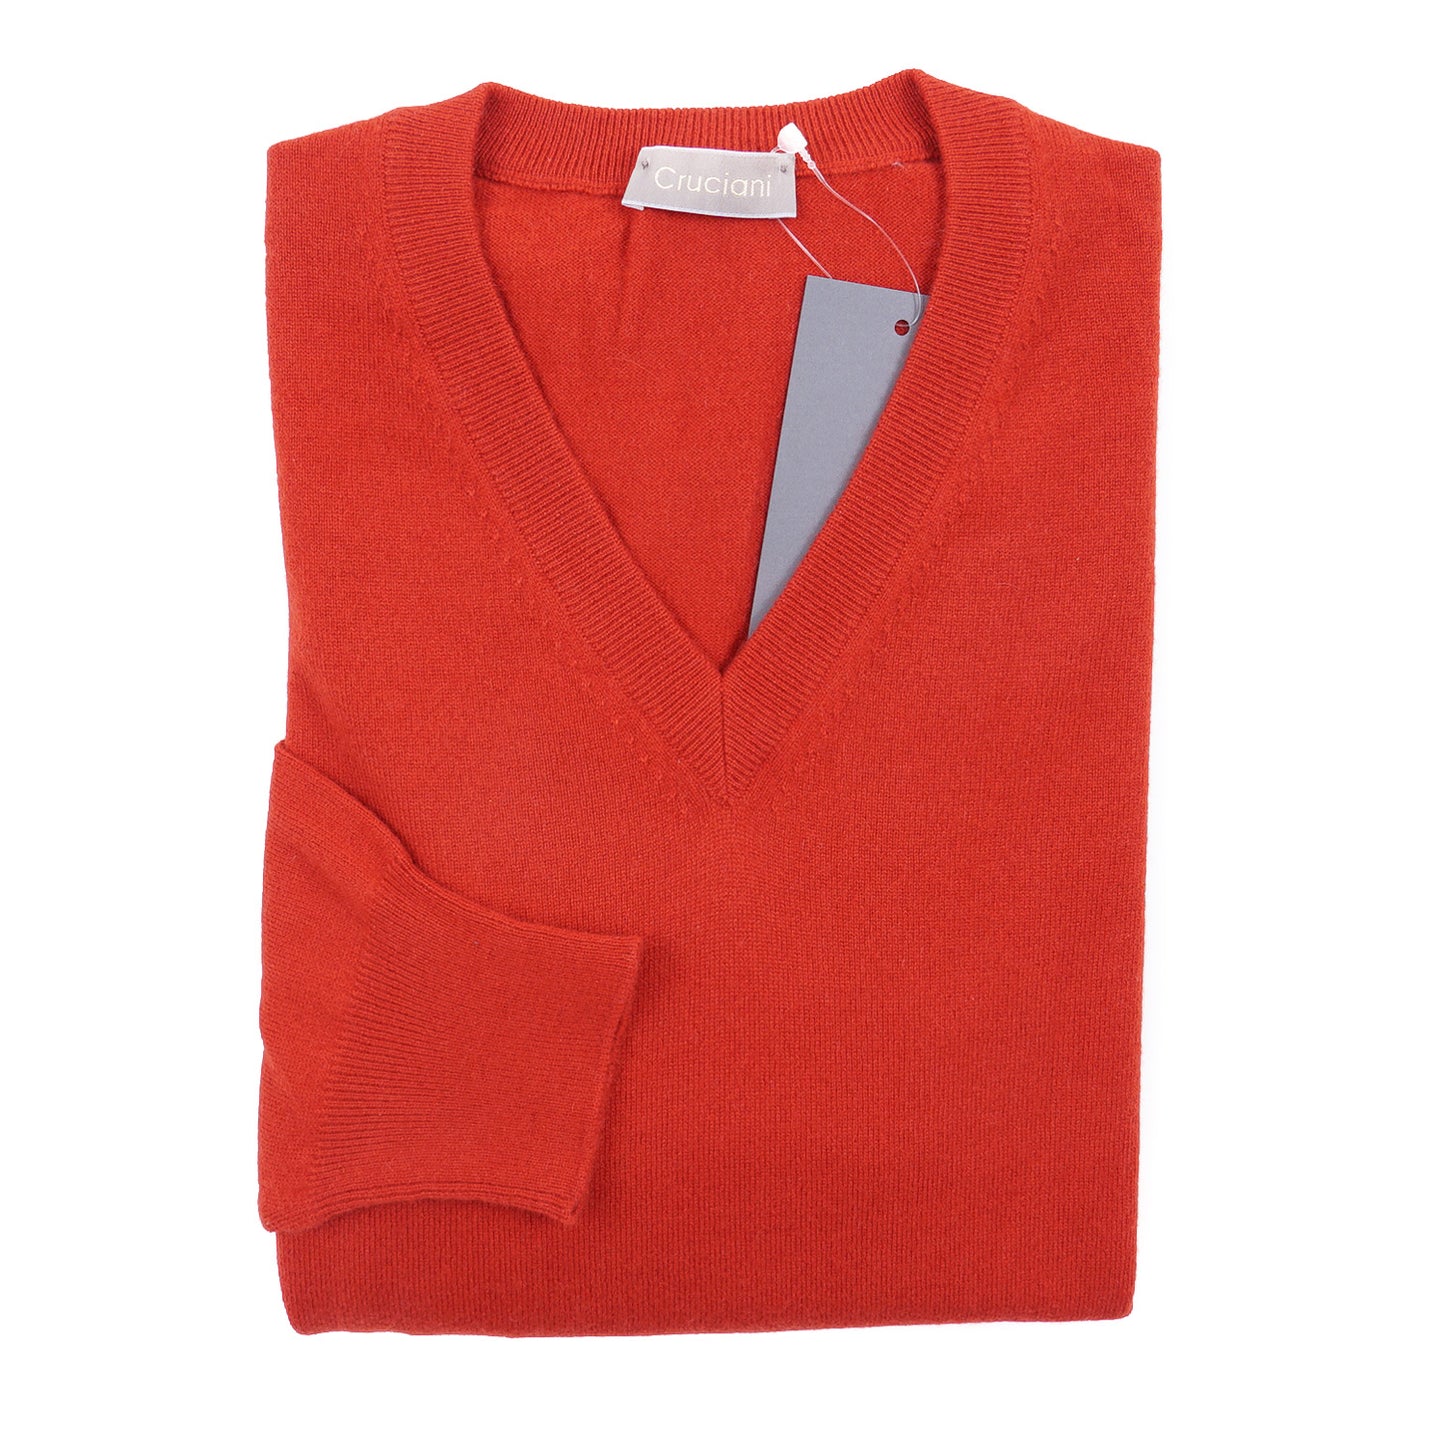 Cruciani Mid-Weight Cashmere Sweater - Top Shelf Apparel